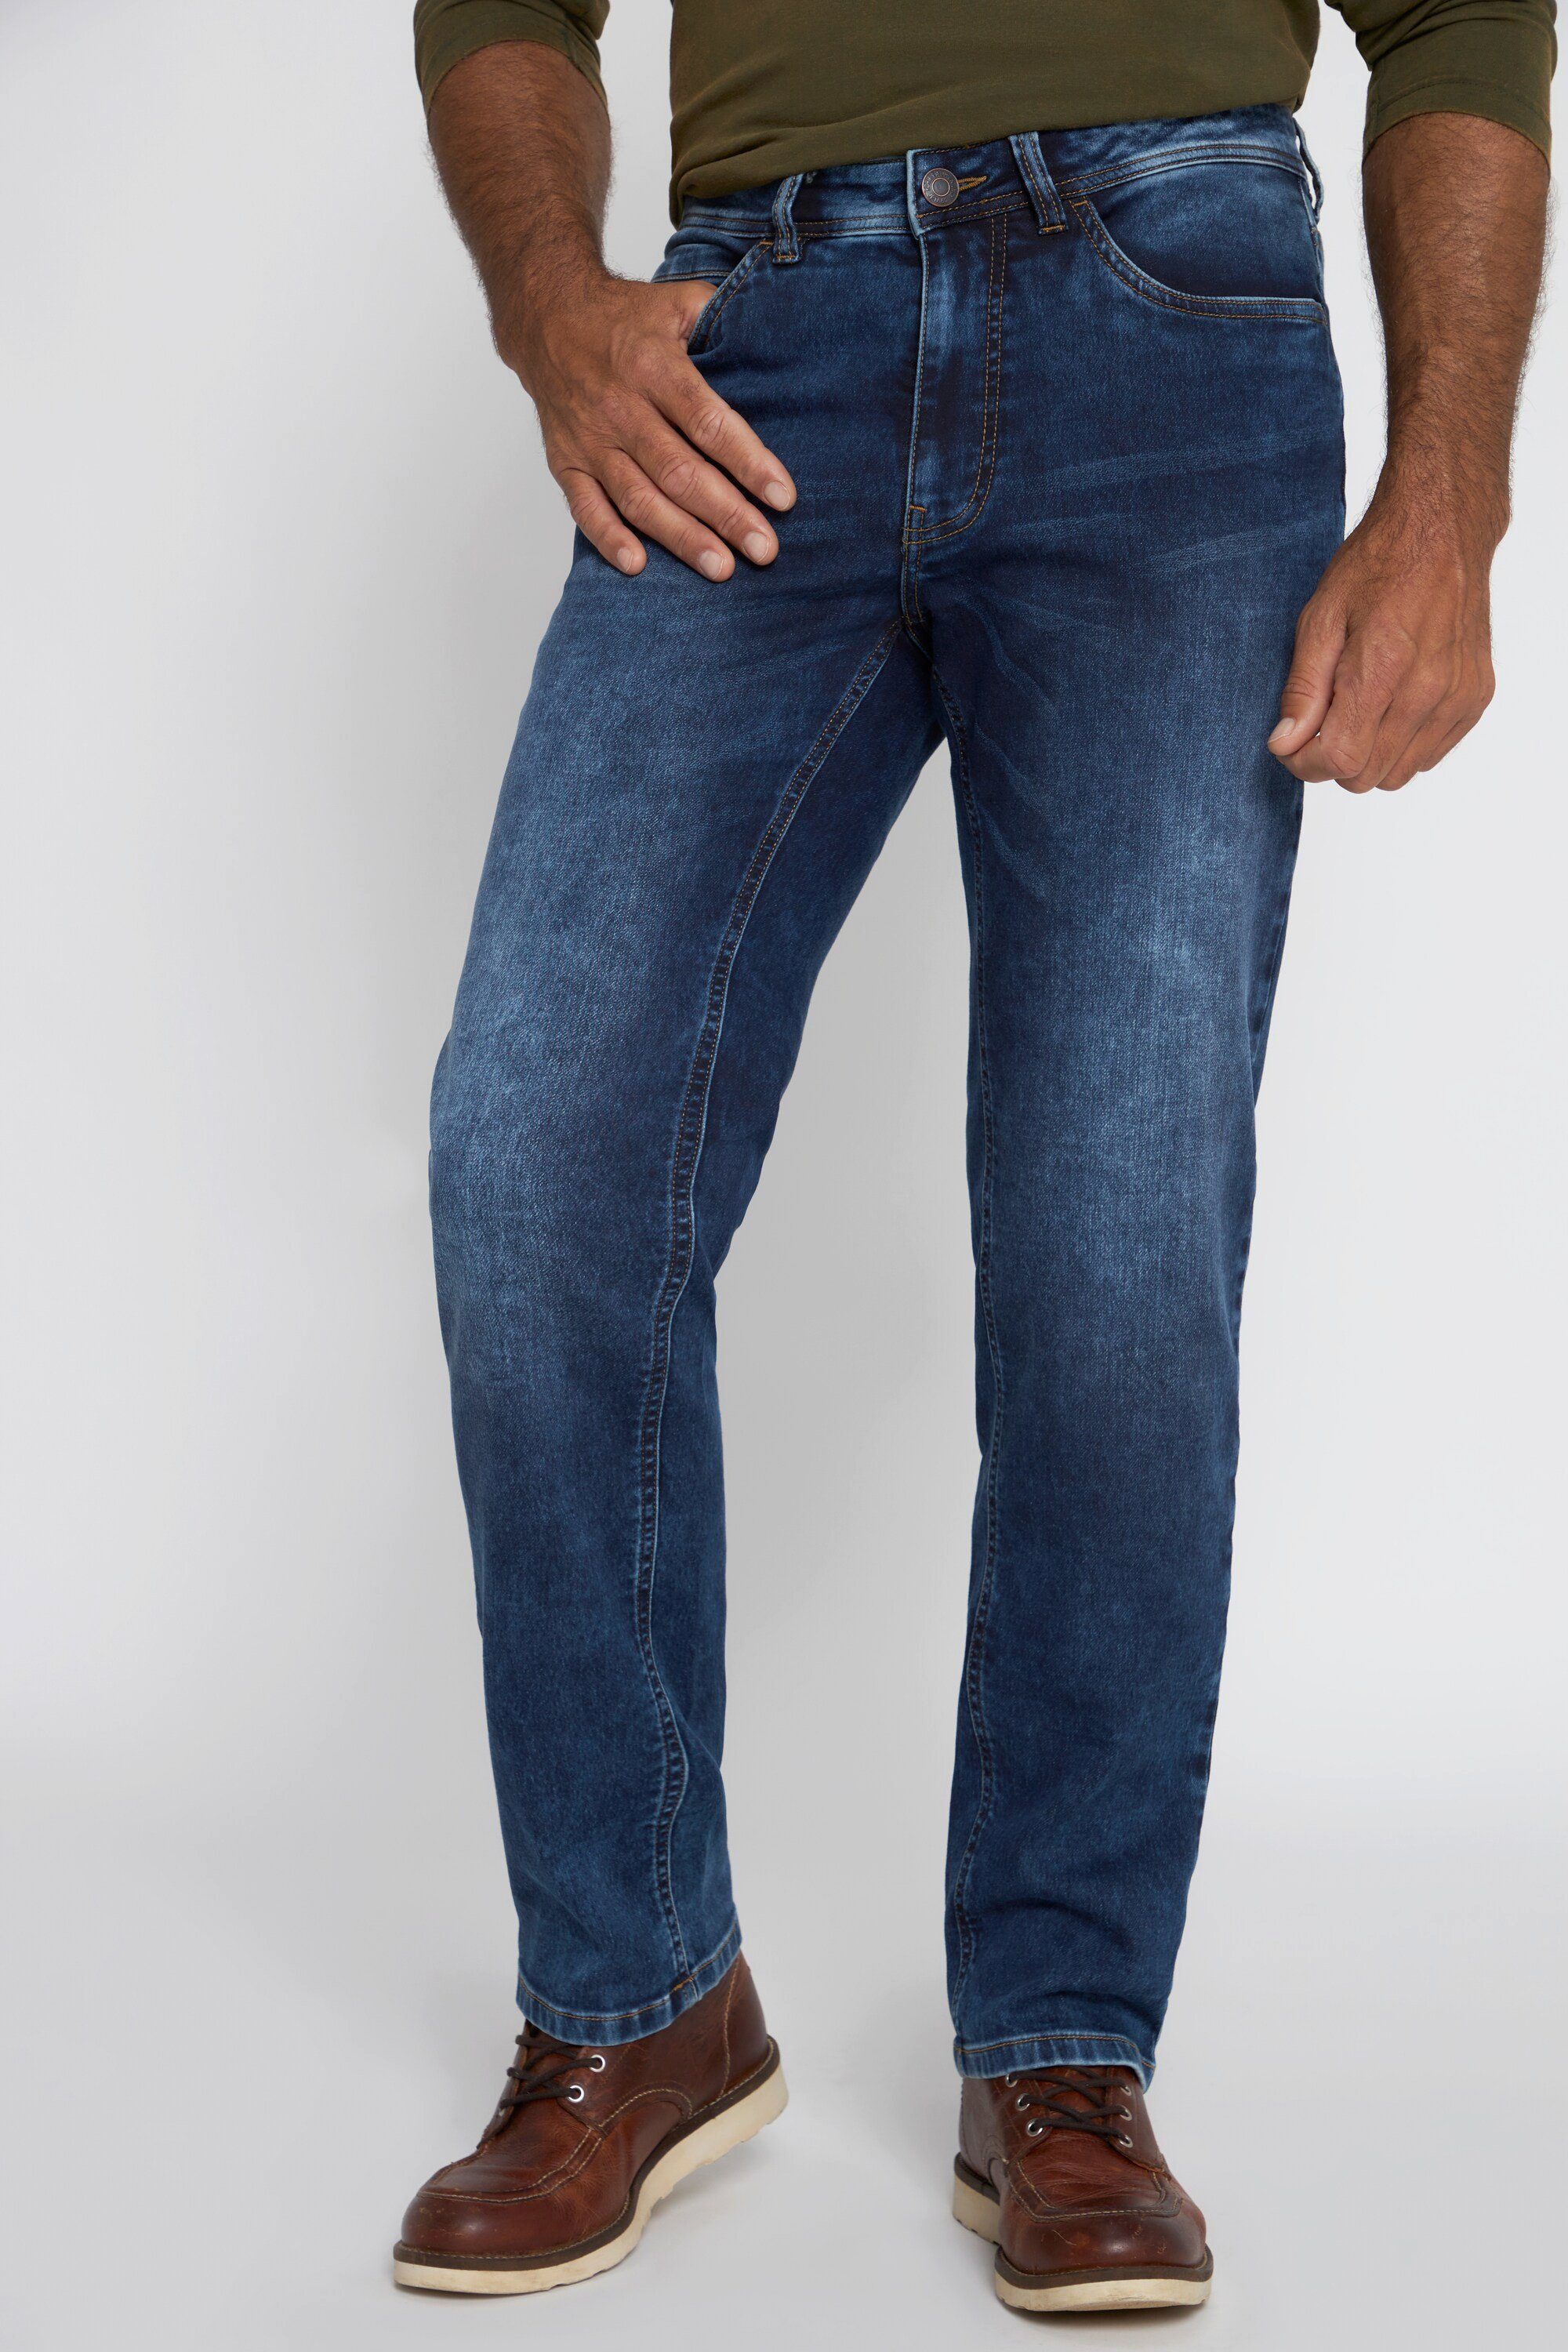 JP1880 Cargohose Jeans Bauch-Fit Denim Staight Fit 5-Pocket